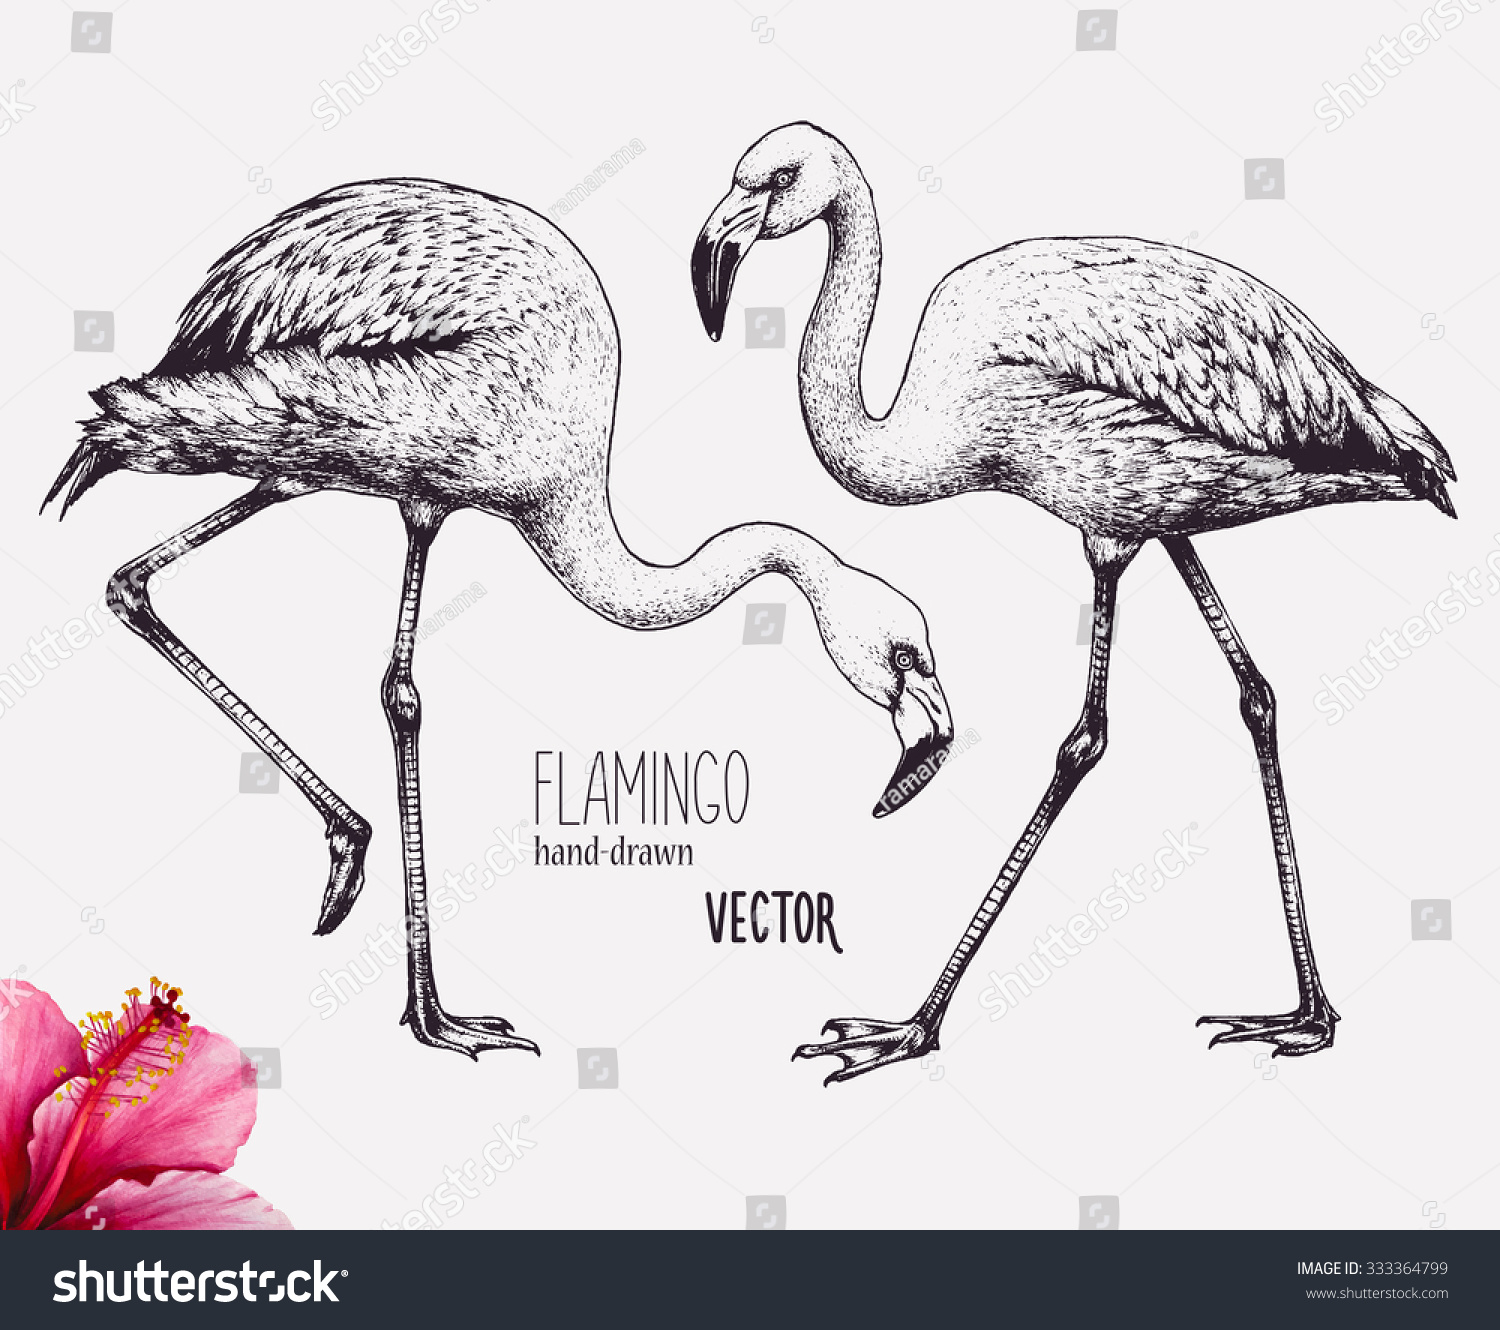  Flamingo Vector Illustration Ink Pen Drawing Stock Vector 333364799 